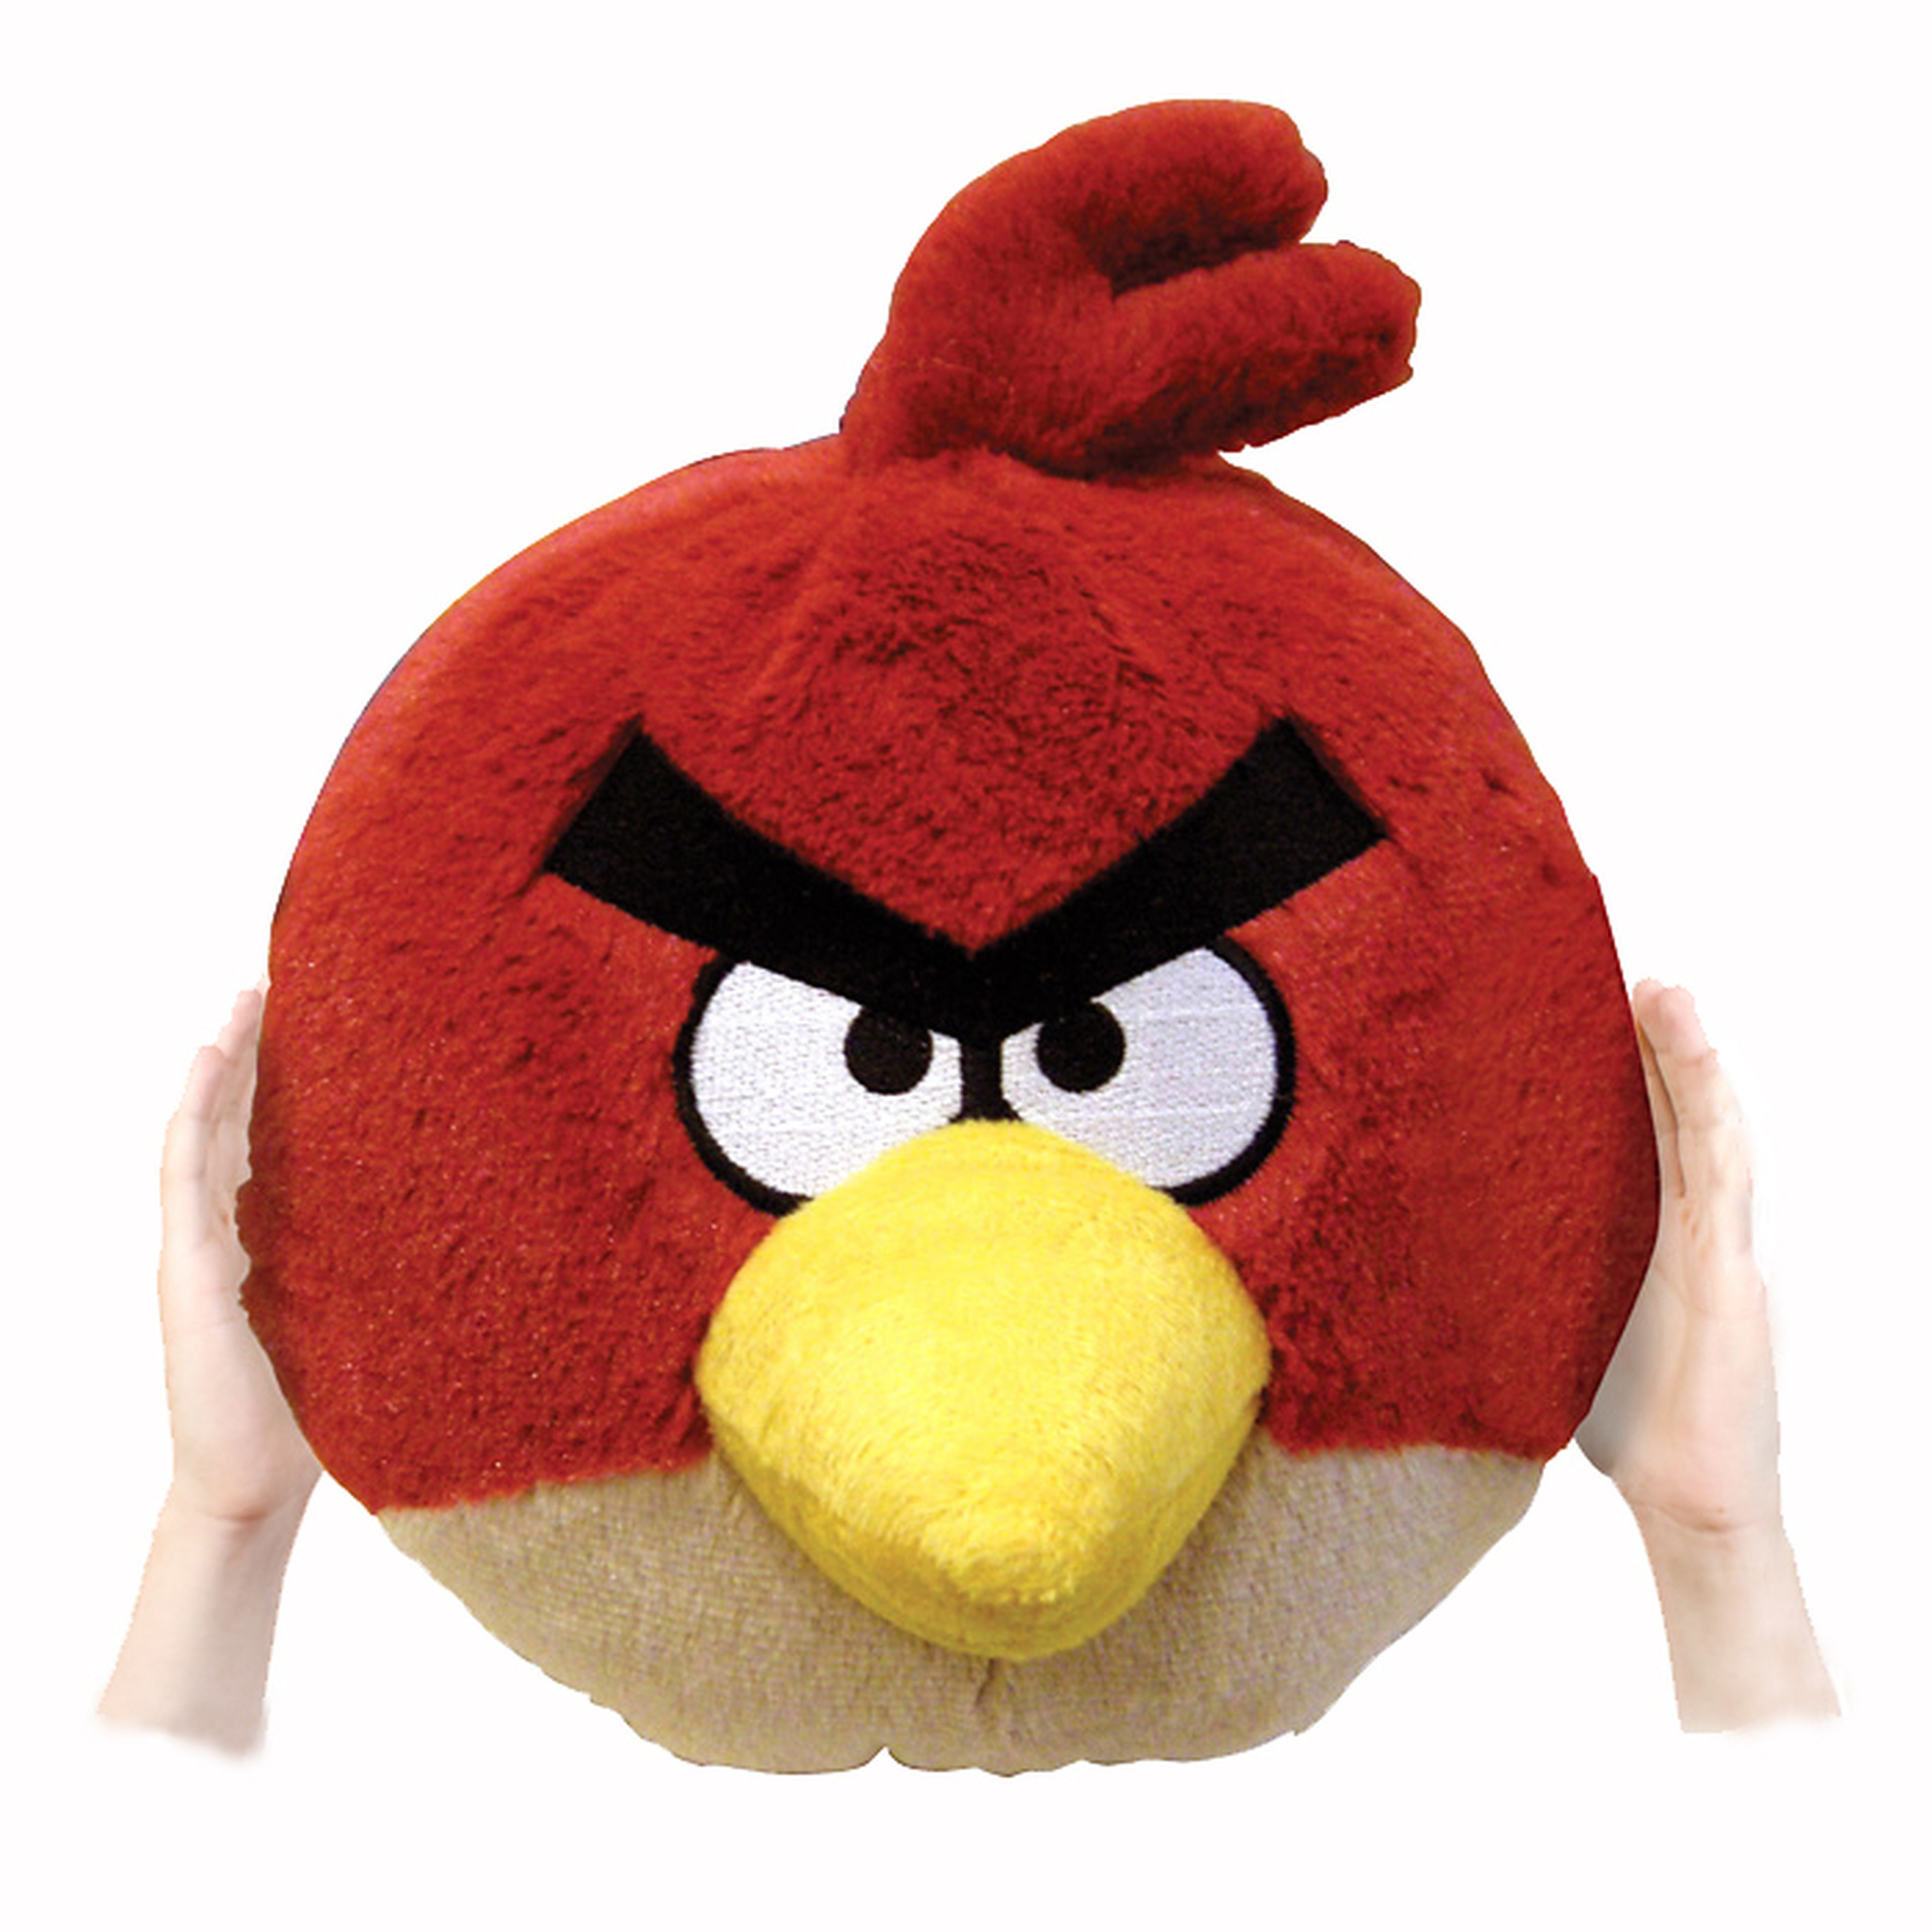 Мягкие игрушки энгри бердз. Angry Birds Plush Toys. Птичка Энгри бердз красная. Игрушки Angry Birds Rovio. Angry Birds мягкая игрушка Рэд.